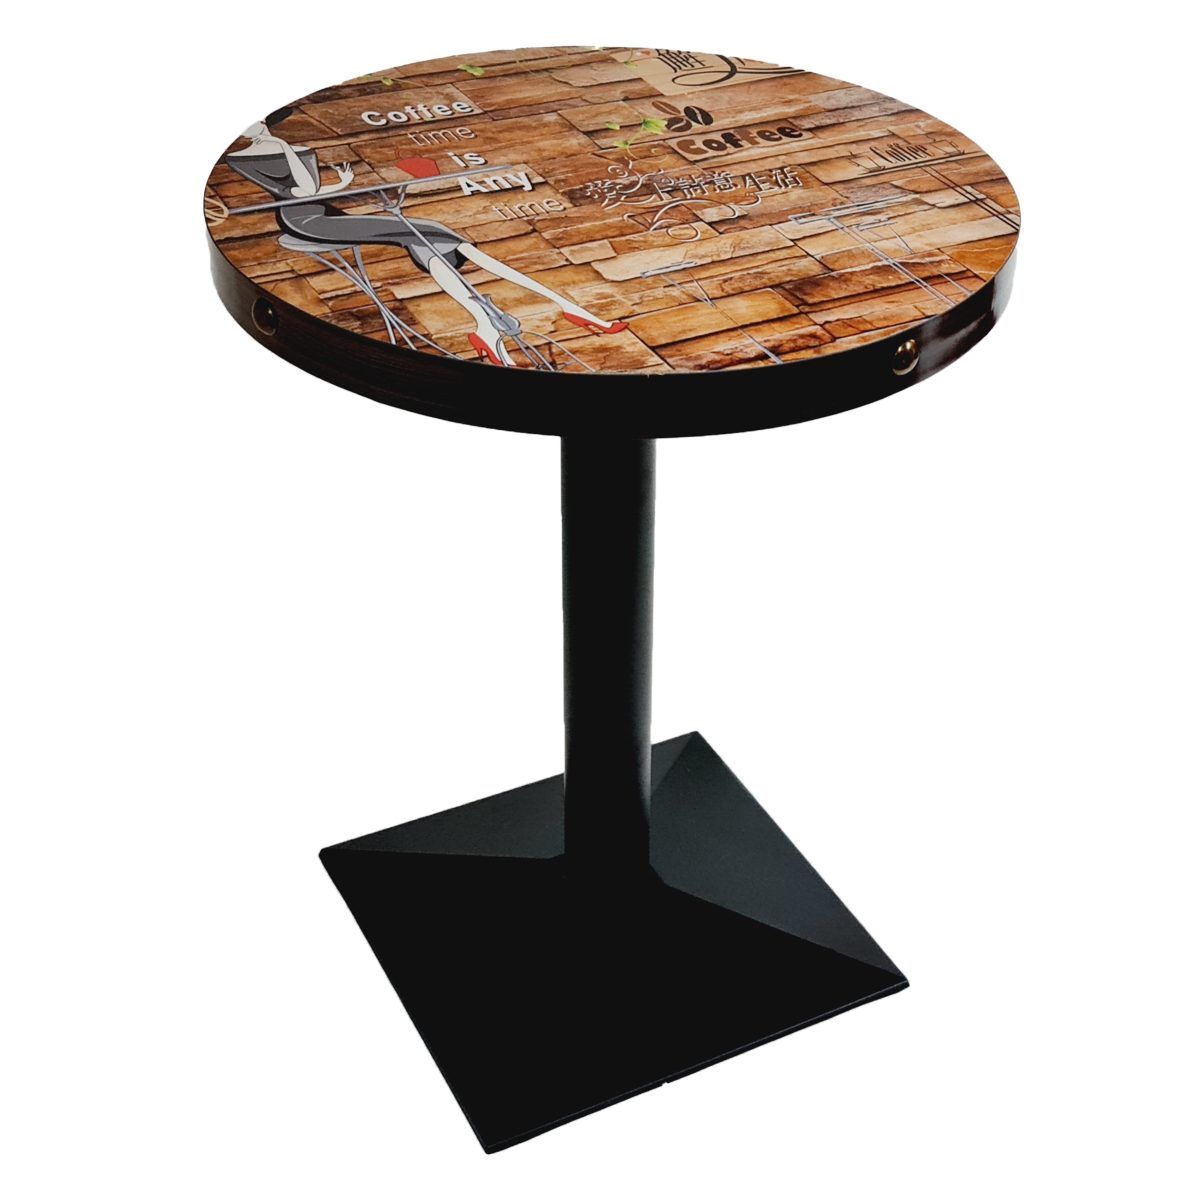 Custom Printed Table Top with Cast iron Legs Best Choice for Café Shops